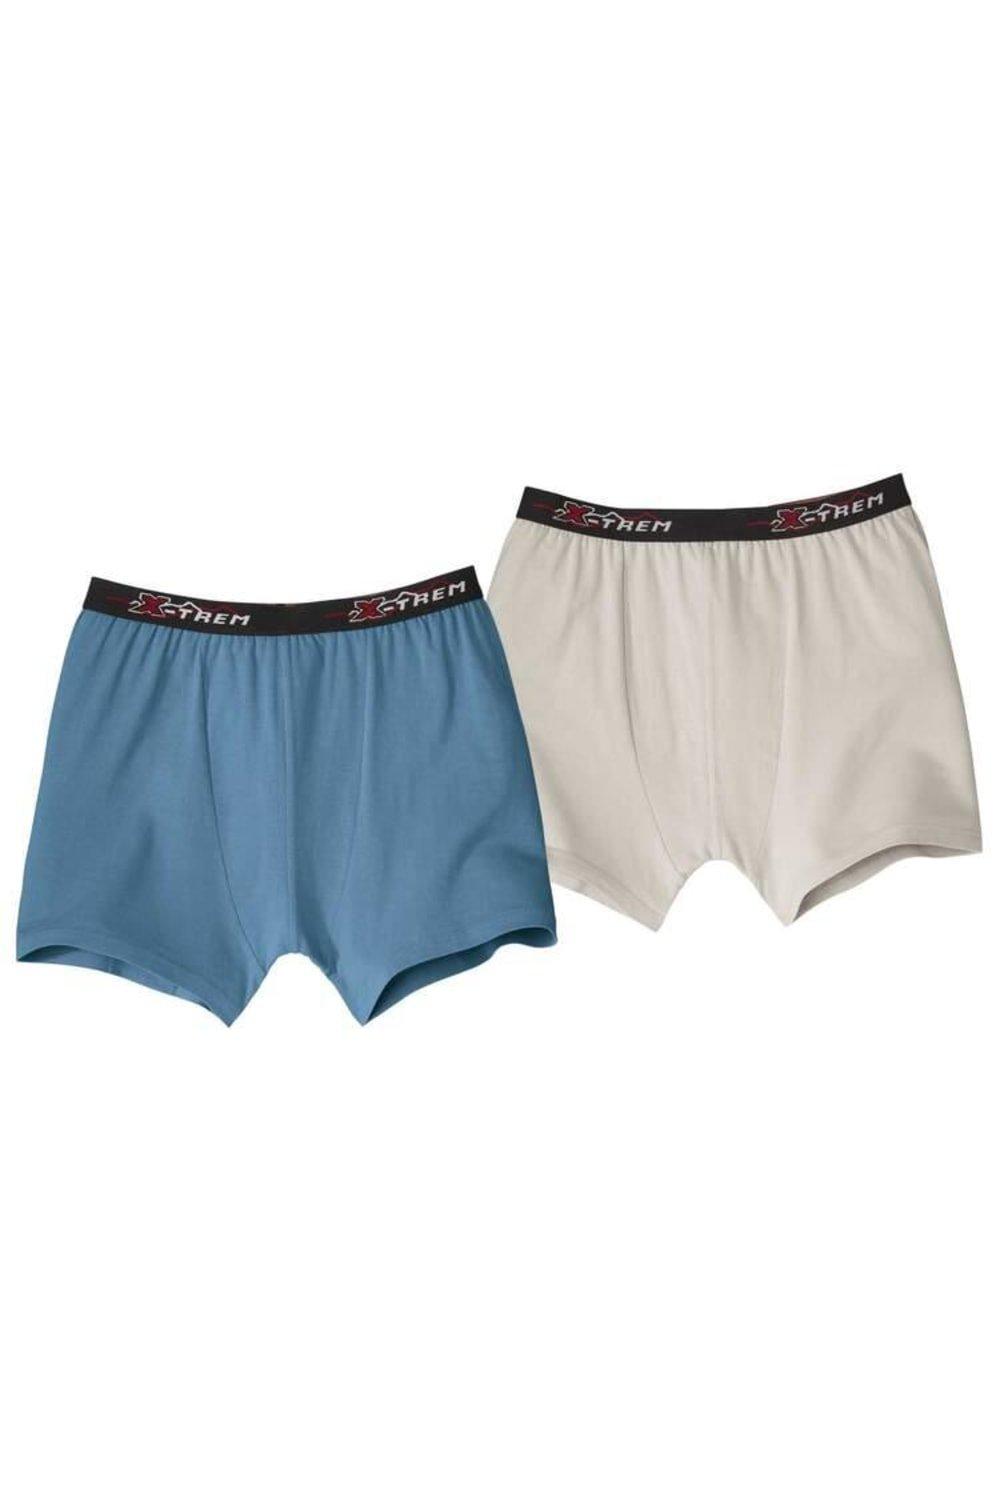 Plain Boxer Shorts (Pack of 2)